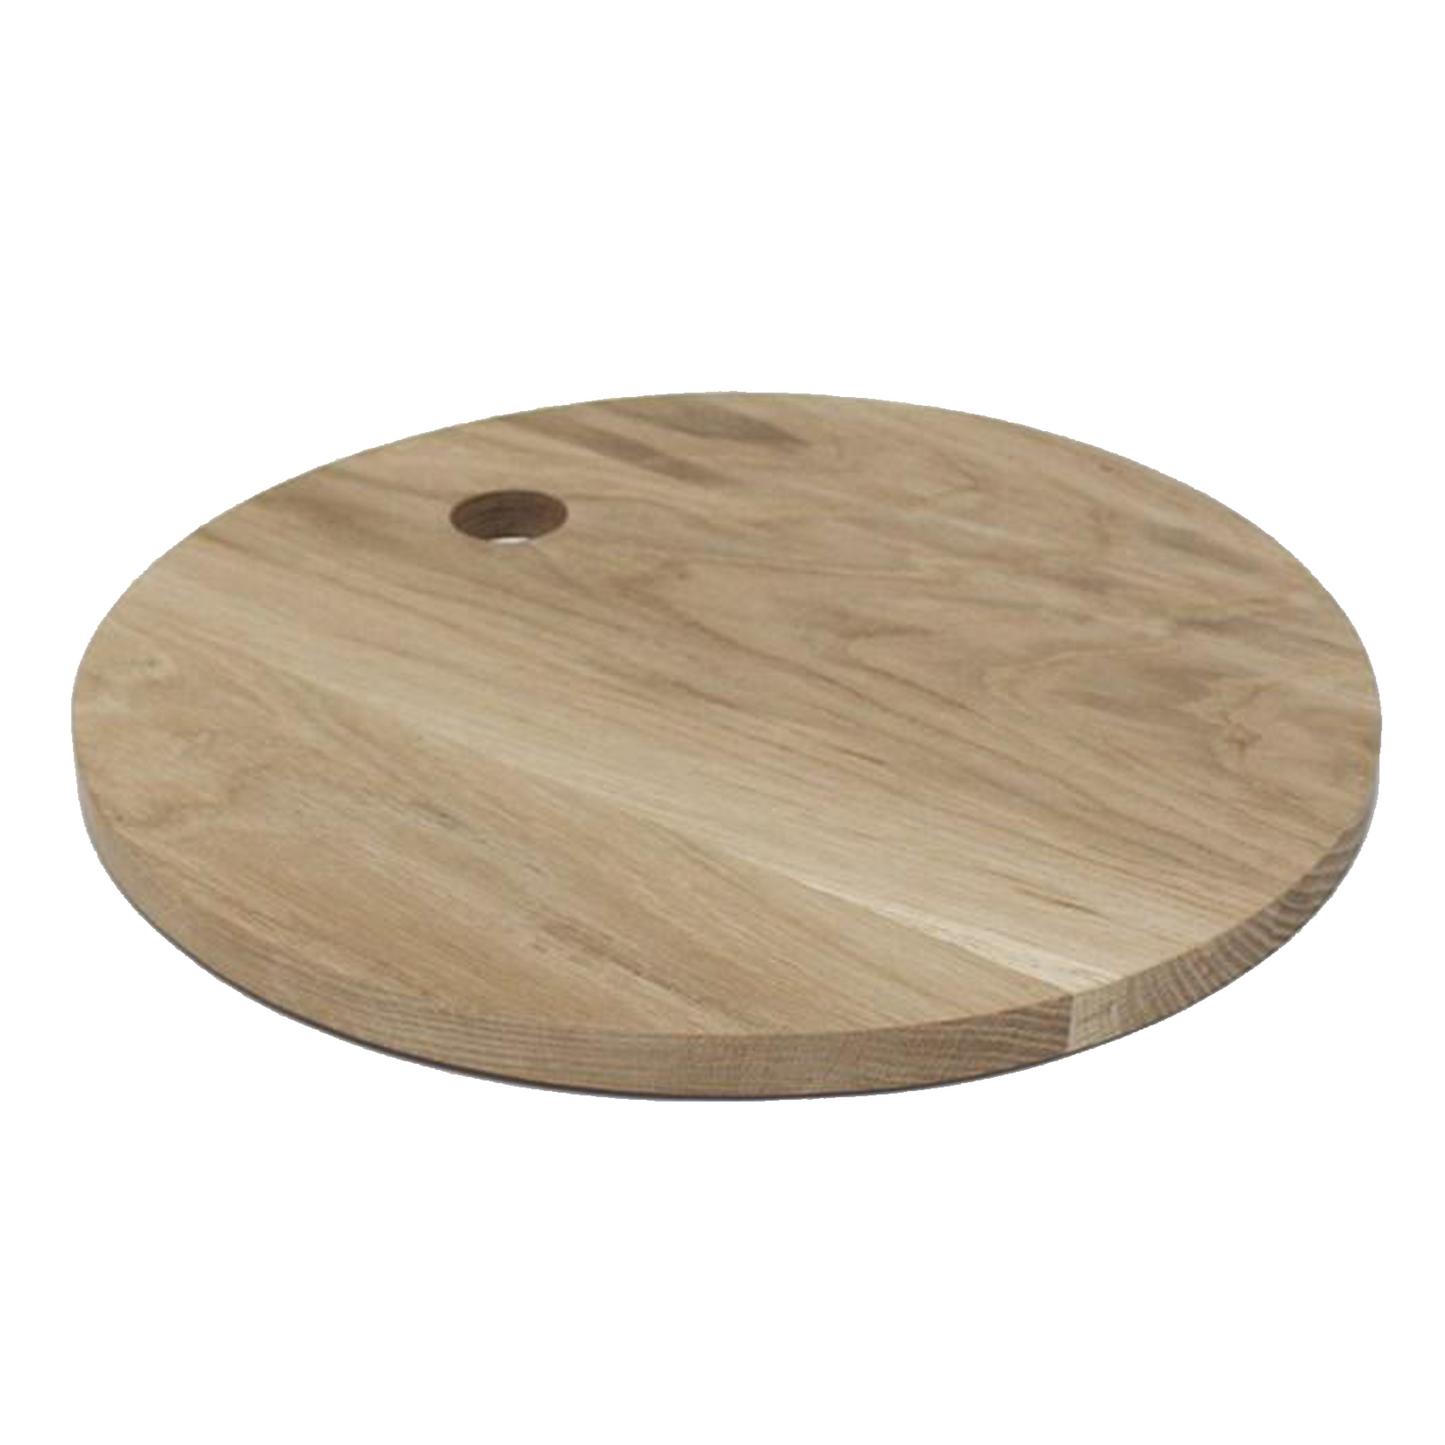 Platter / Chopping Board - Round